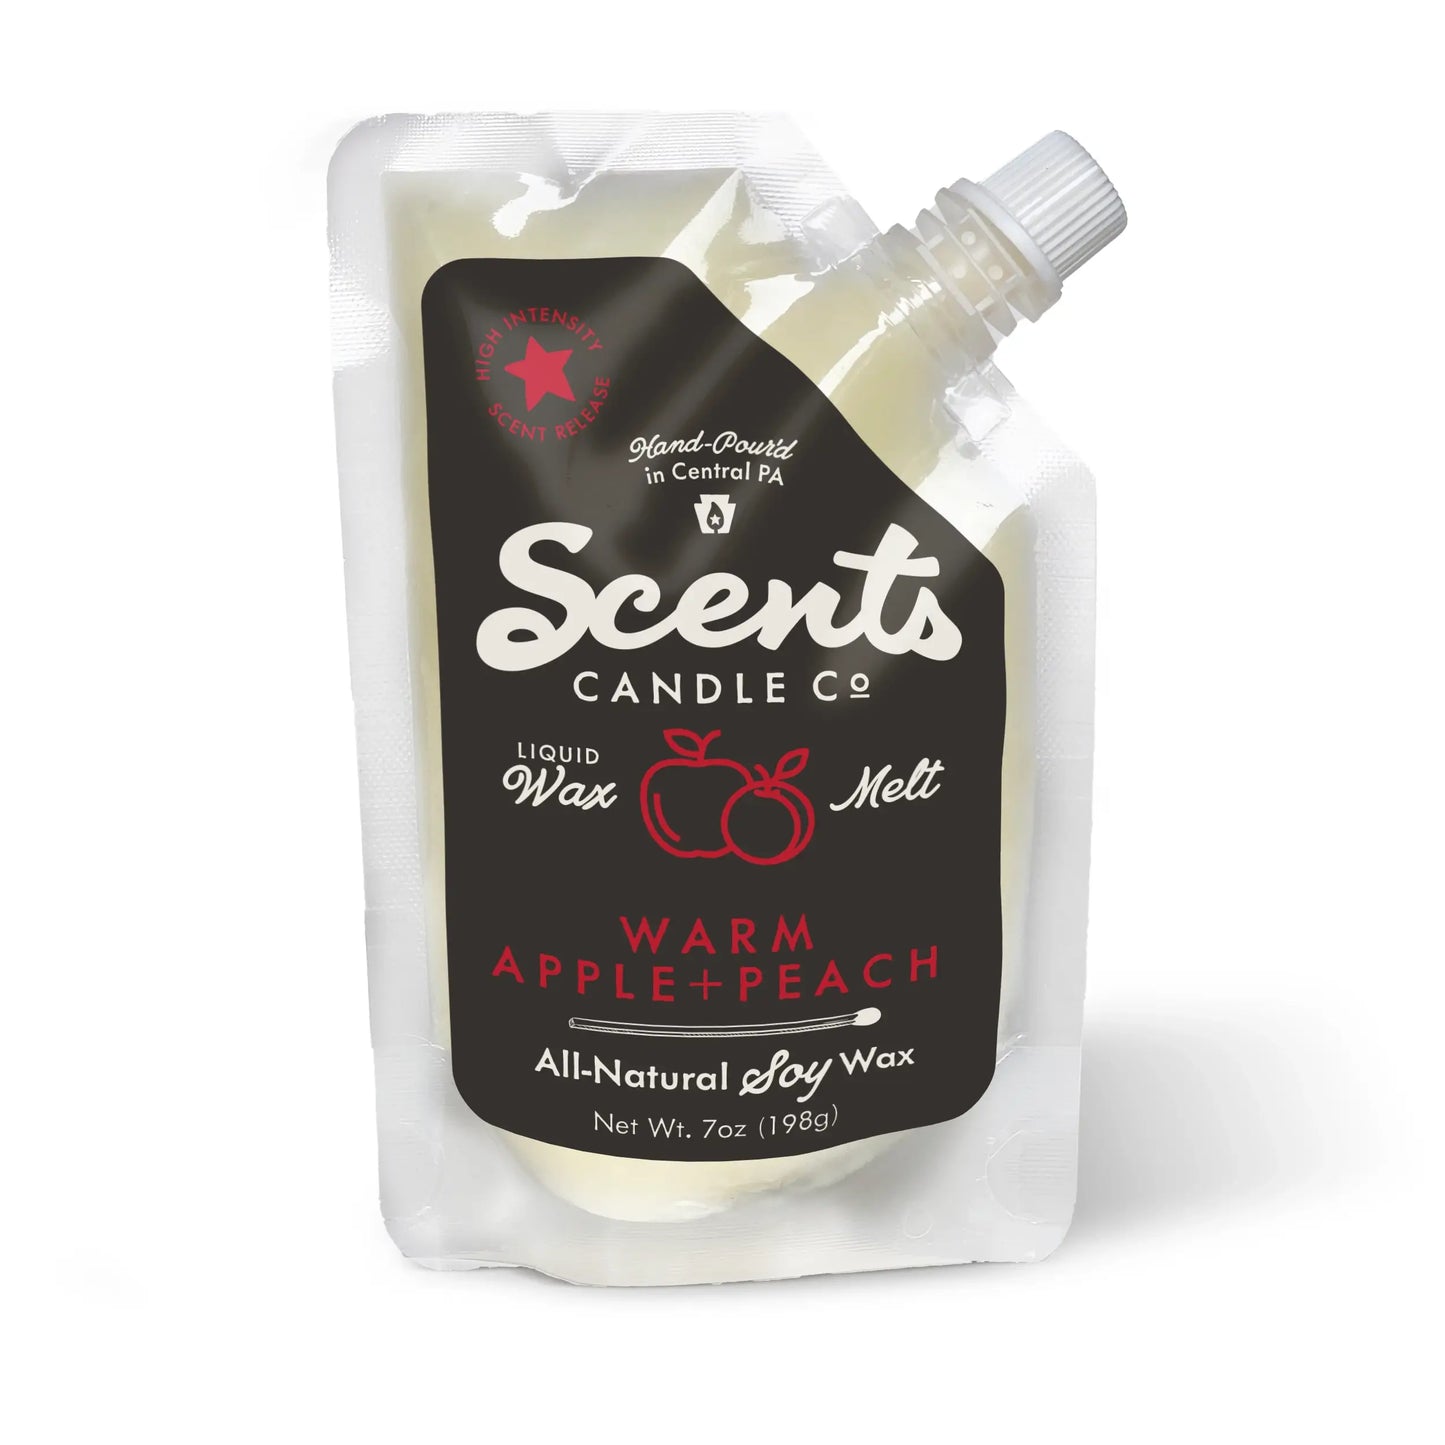 Scents Candle Co. Warm Apple + Peach Liquid Wax Melt